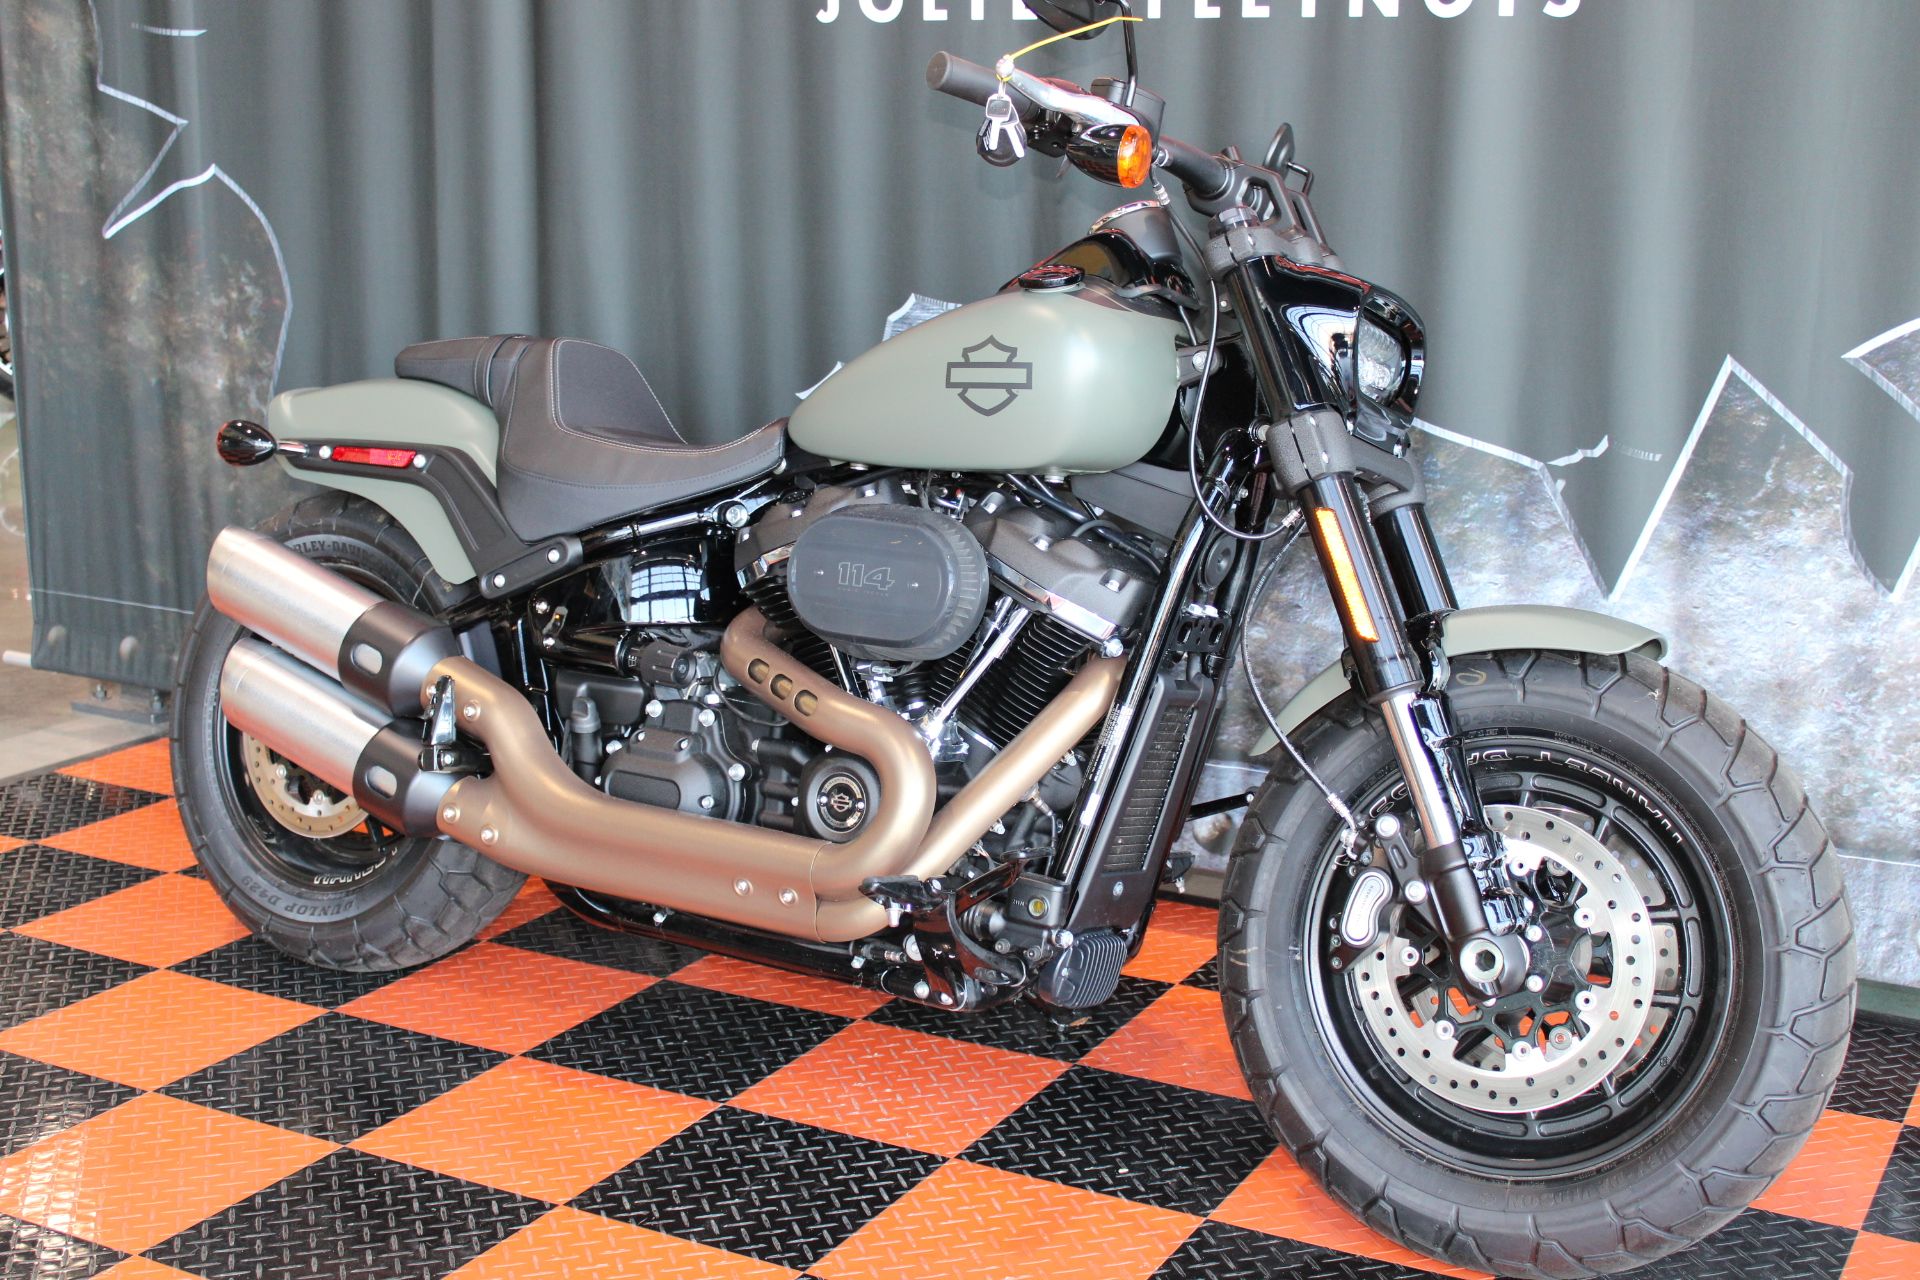 2021 Harley-Davidson Fat Bob® 114 in Shorewood, Illinois - Photo 3